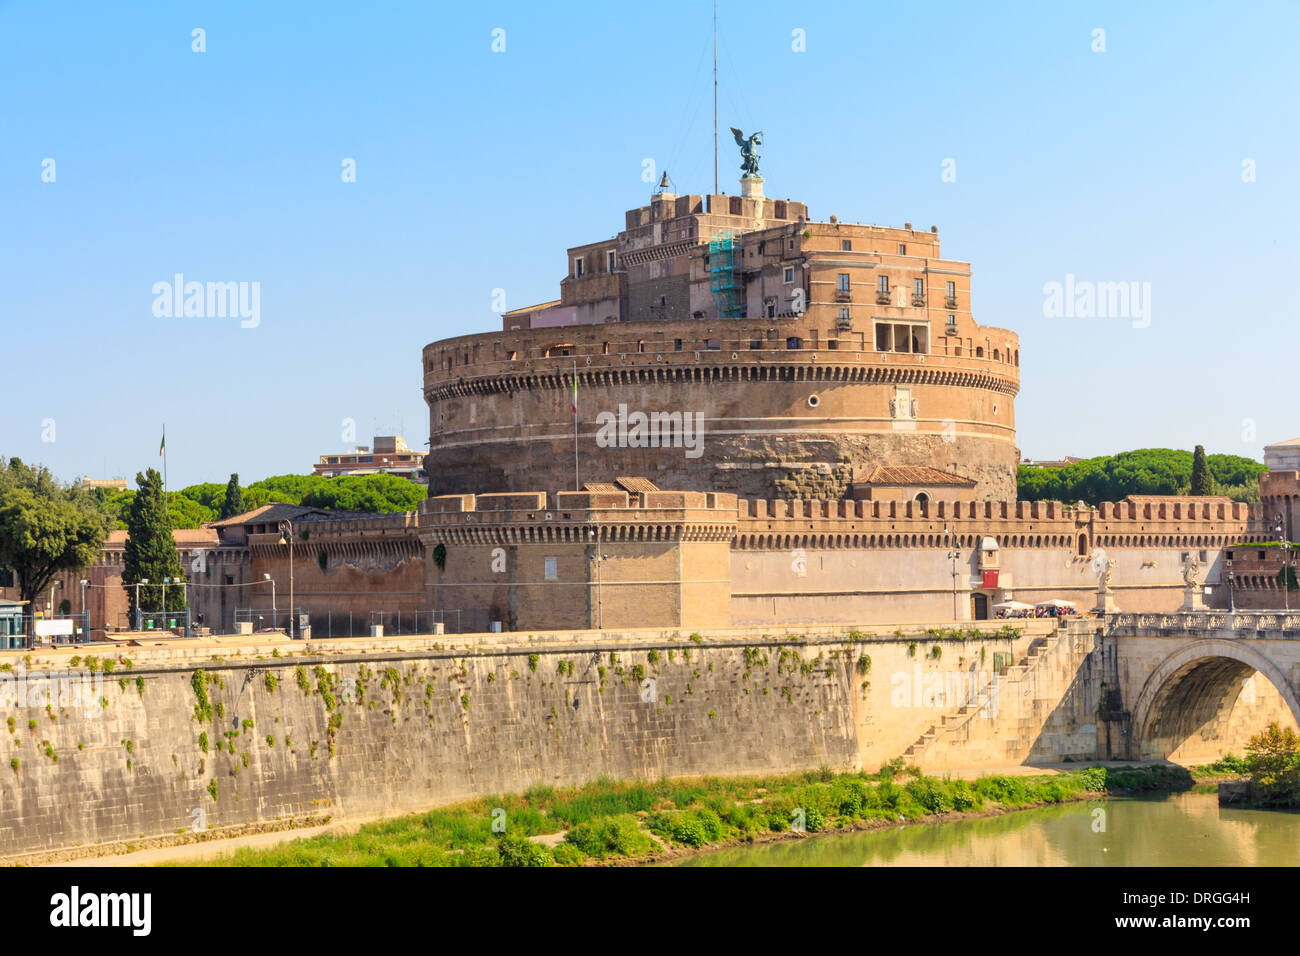 The Mausoleum of Hadrian, Castel Sant Angelo, Rome, Italy Stock Photo